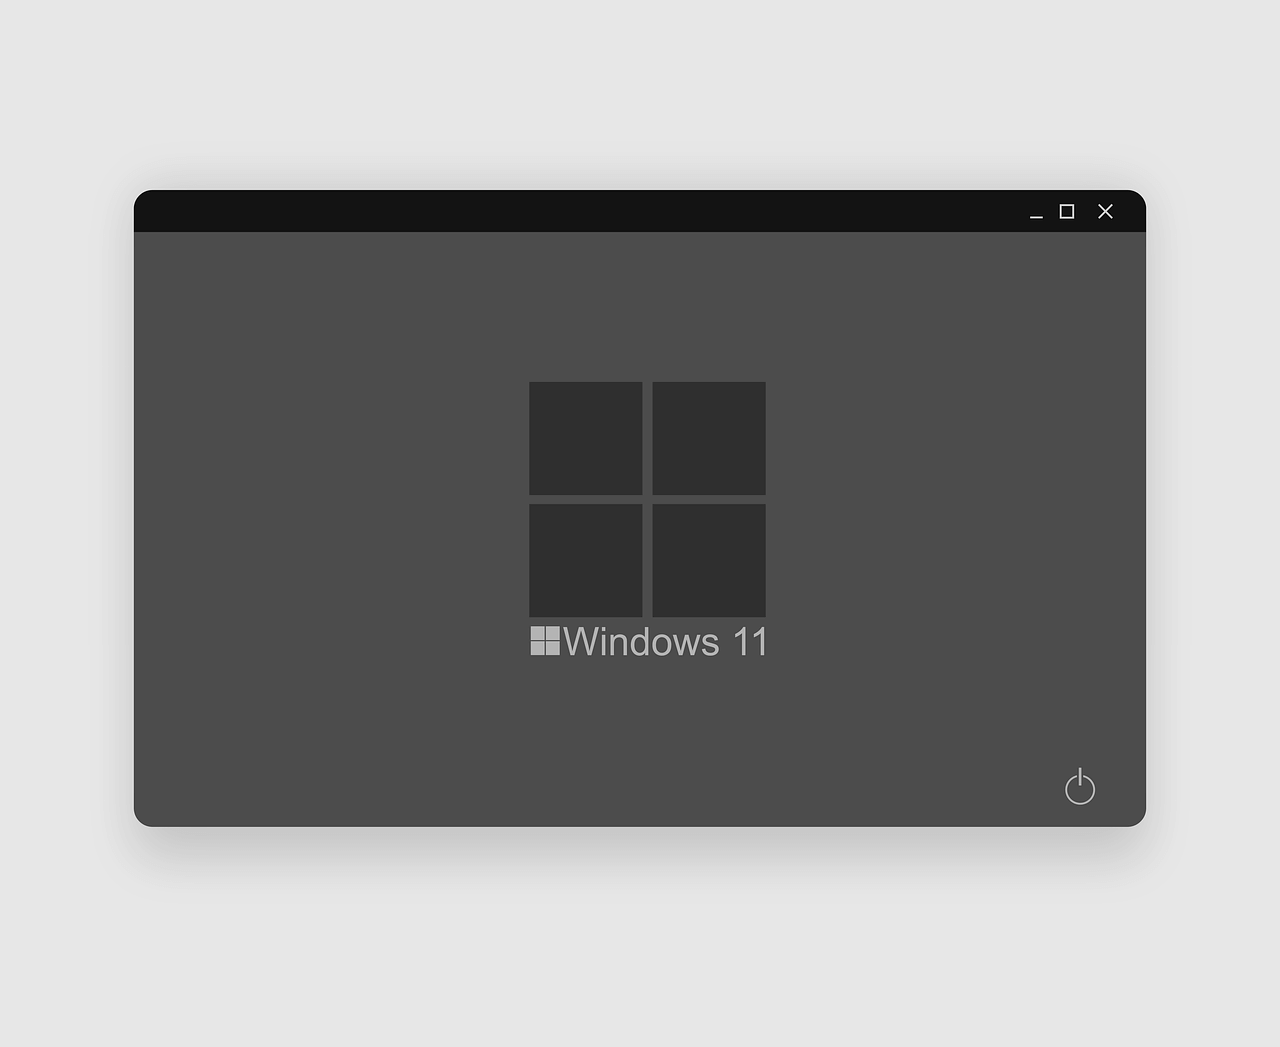 How to take a screenshot on Windows 11